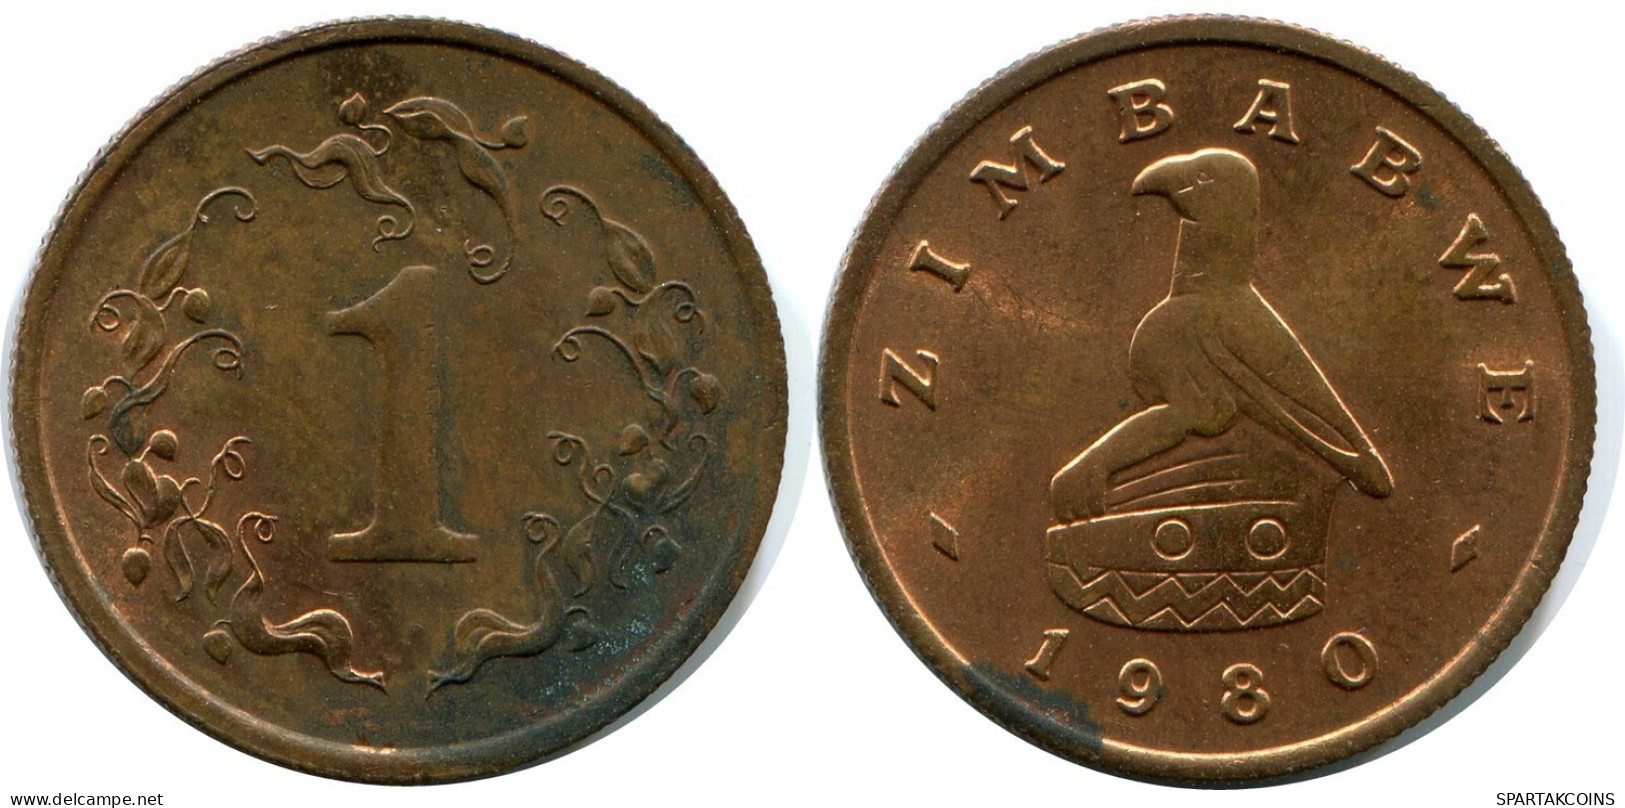 1 CENT 1980 ZIMBABWE Coin #AZ086.U.A - Zimbabwe